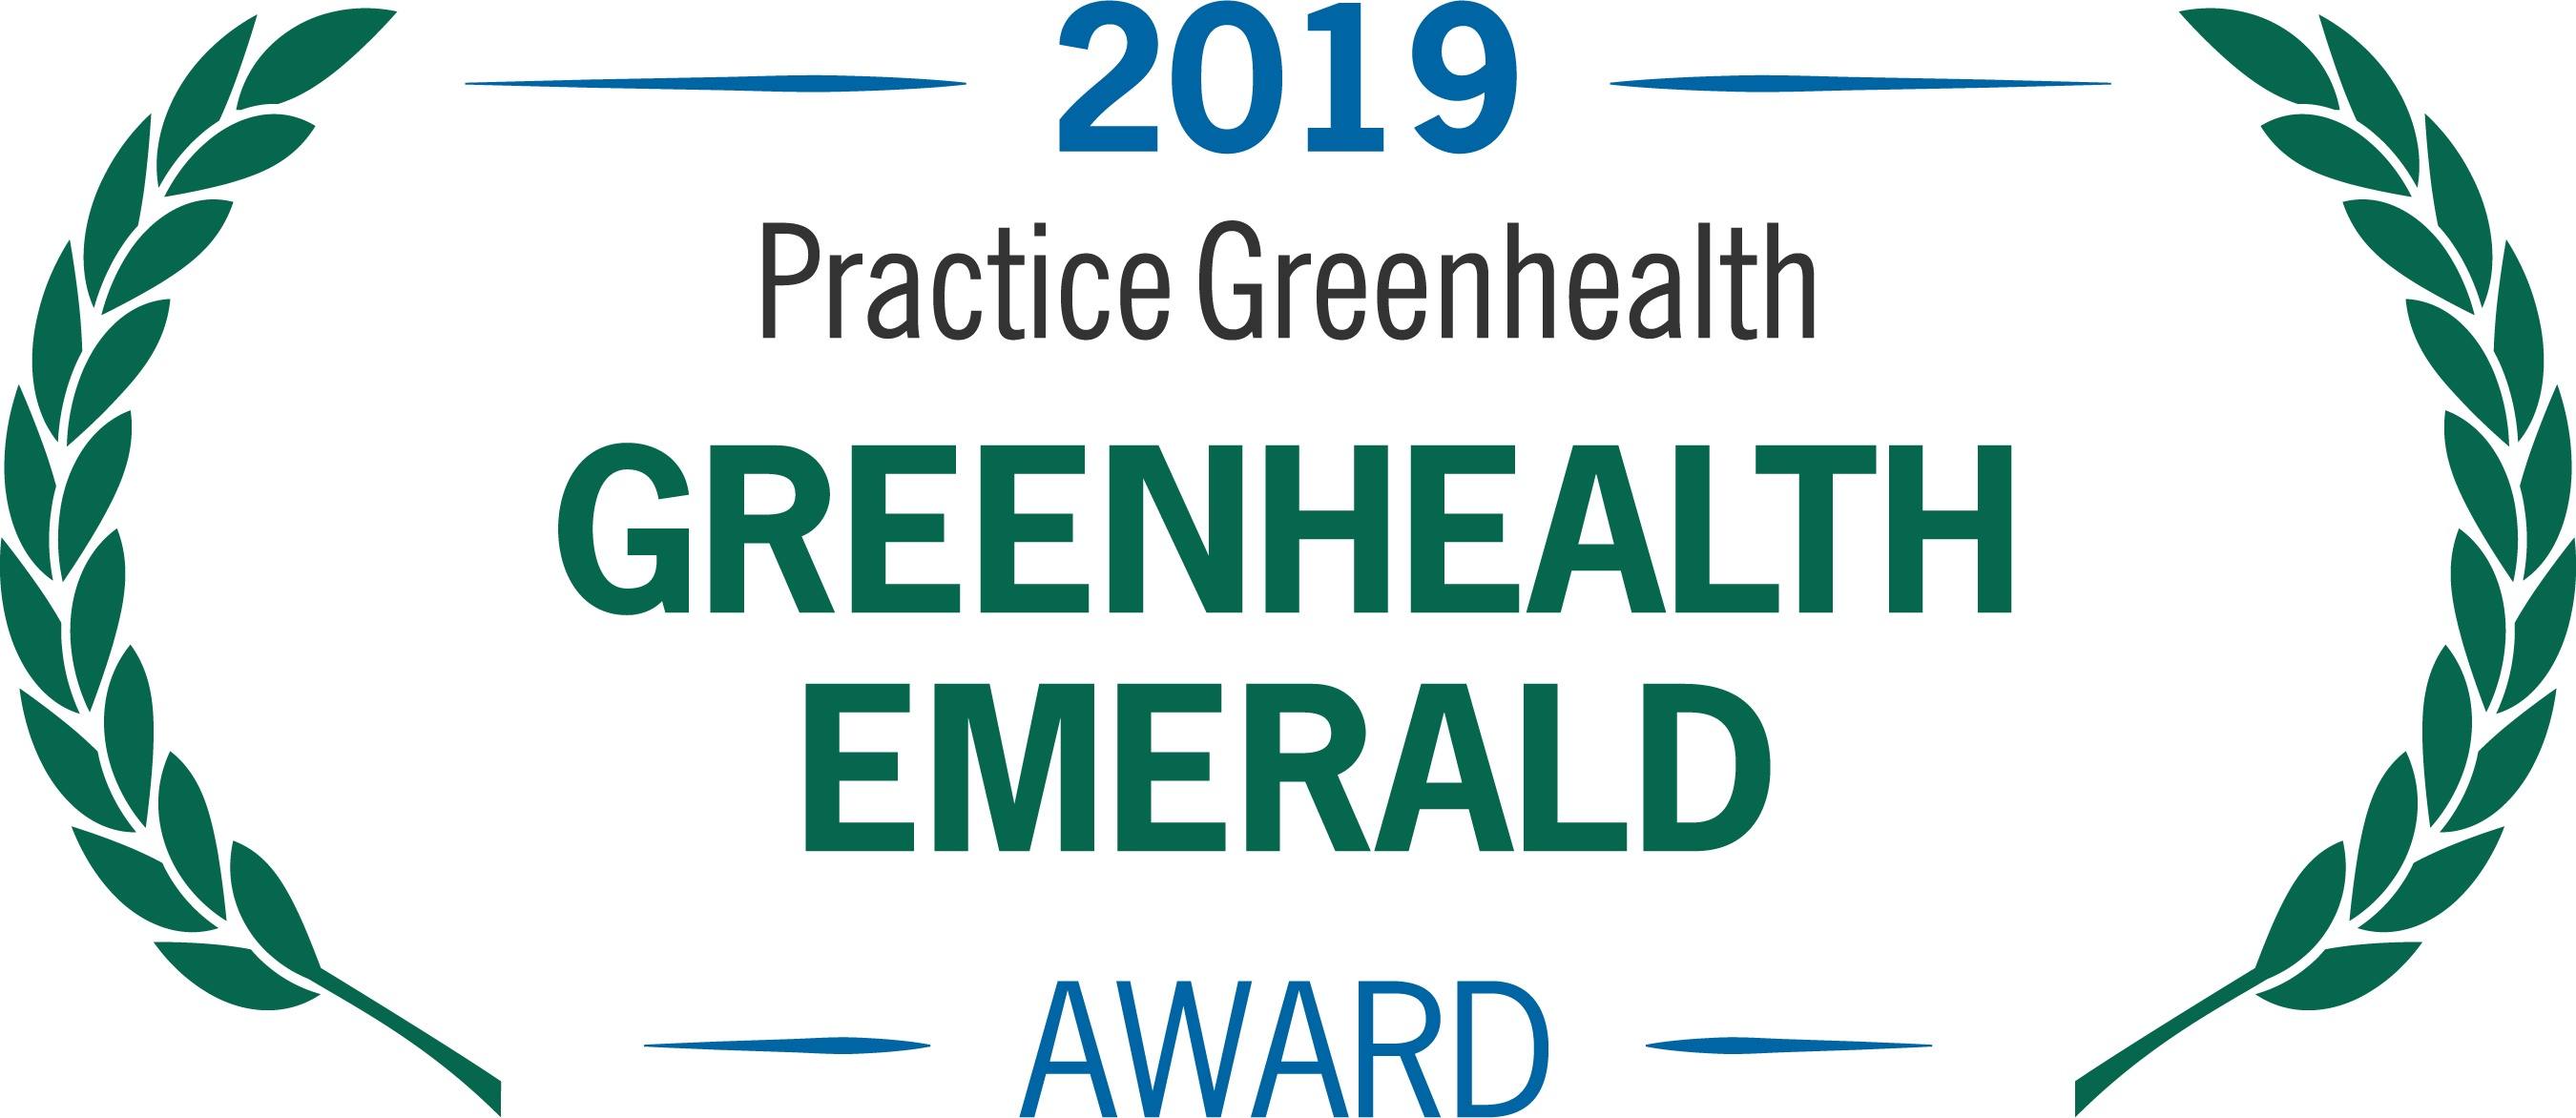 Practice Greenhealth Emerald Award 2019